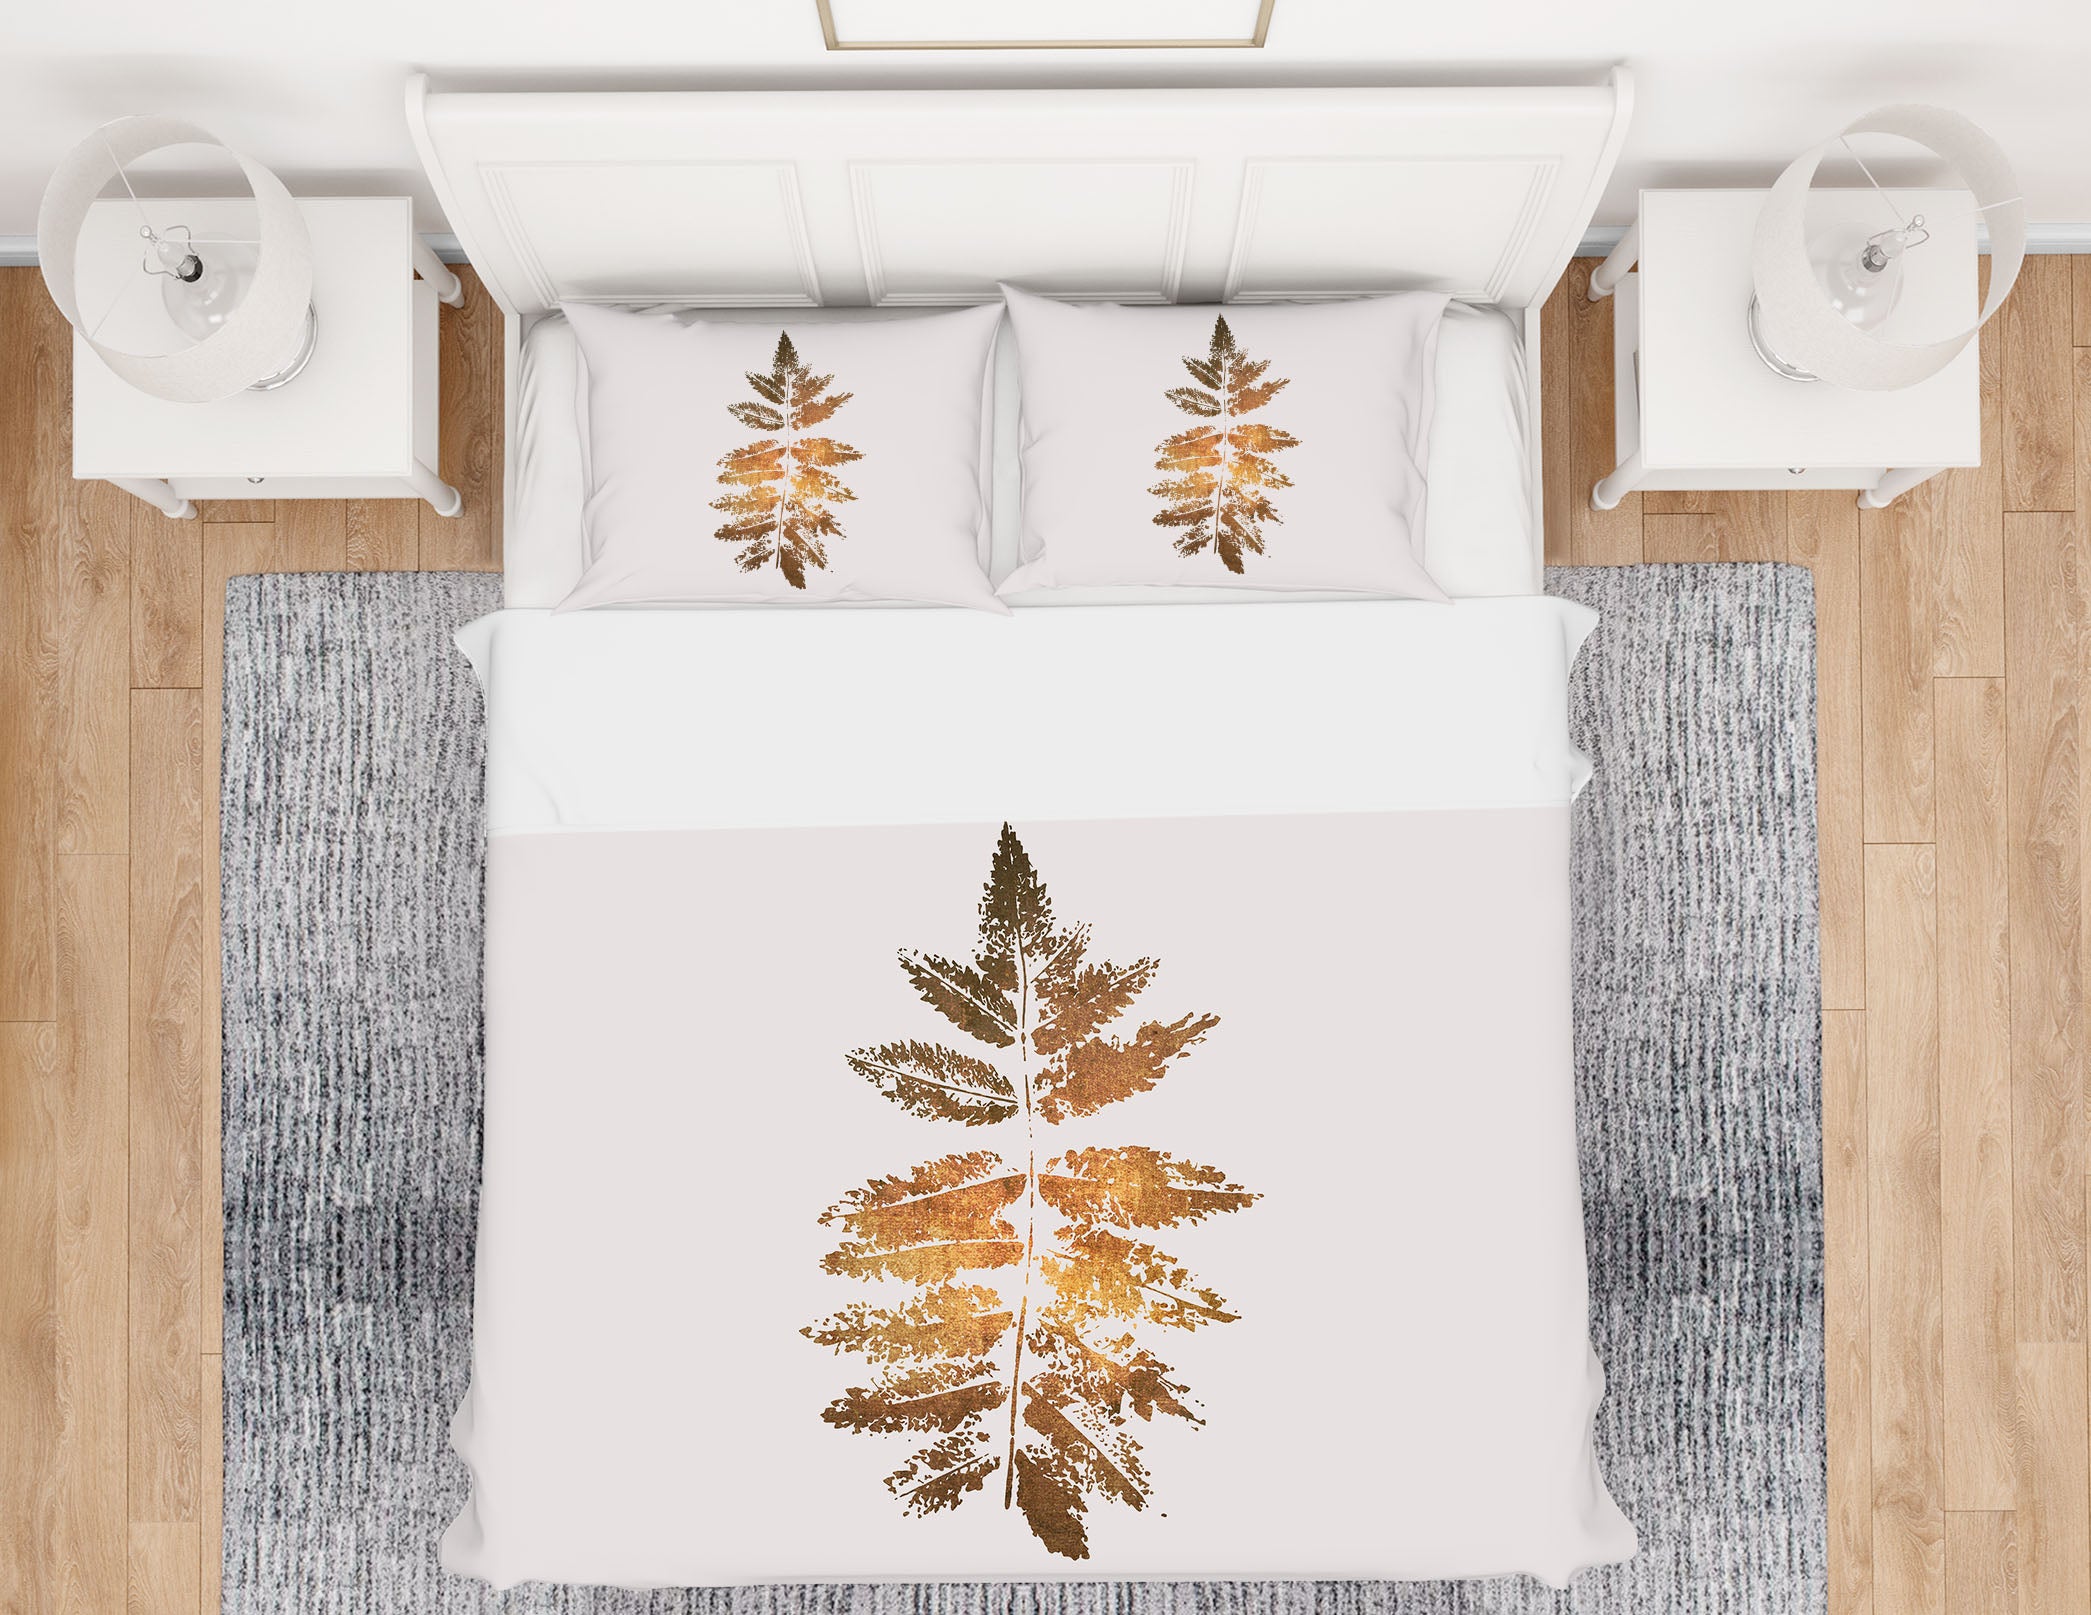 3D Leaf Decoration 193 Boris Draschoff Bedding Bed Pillowcases Quilt